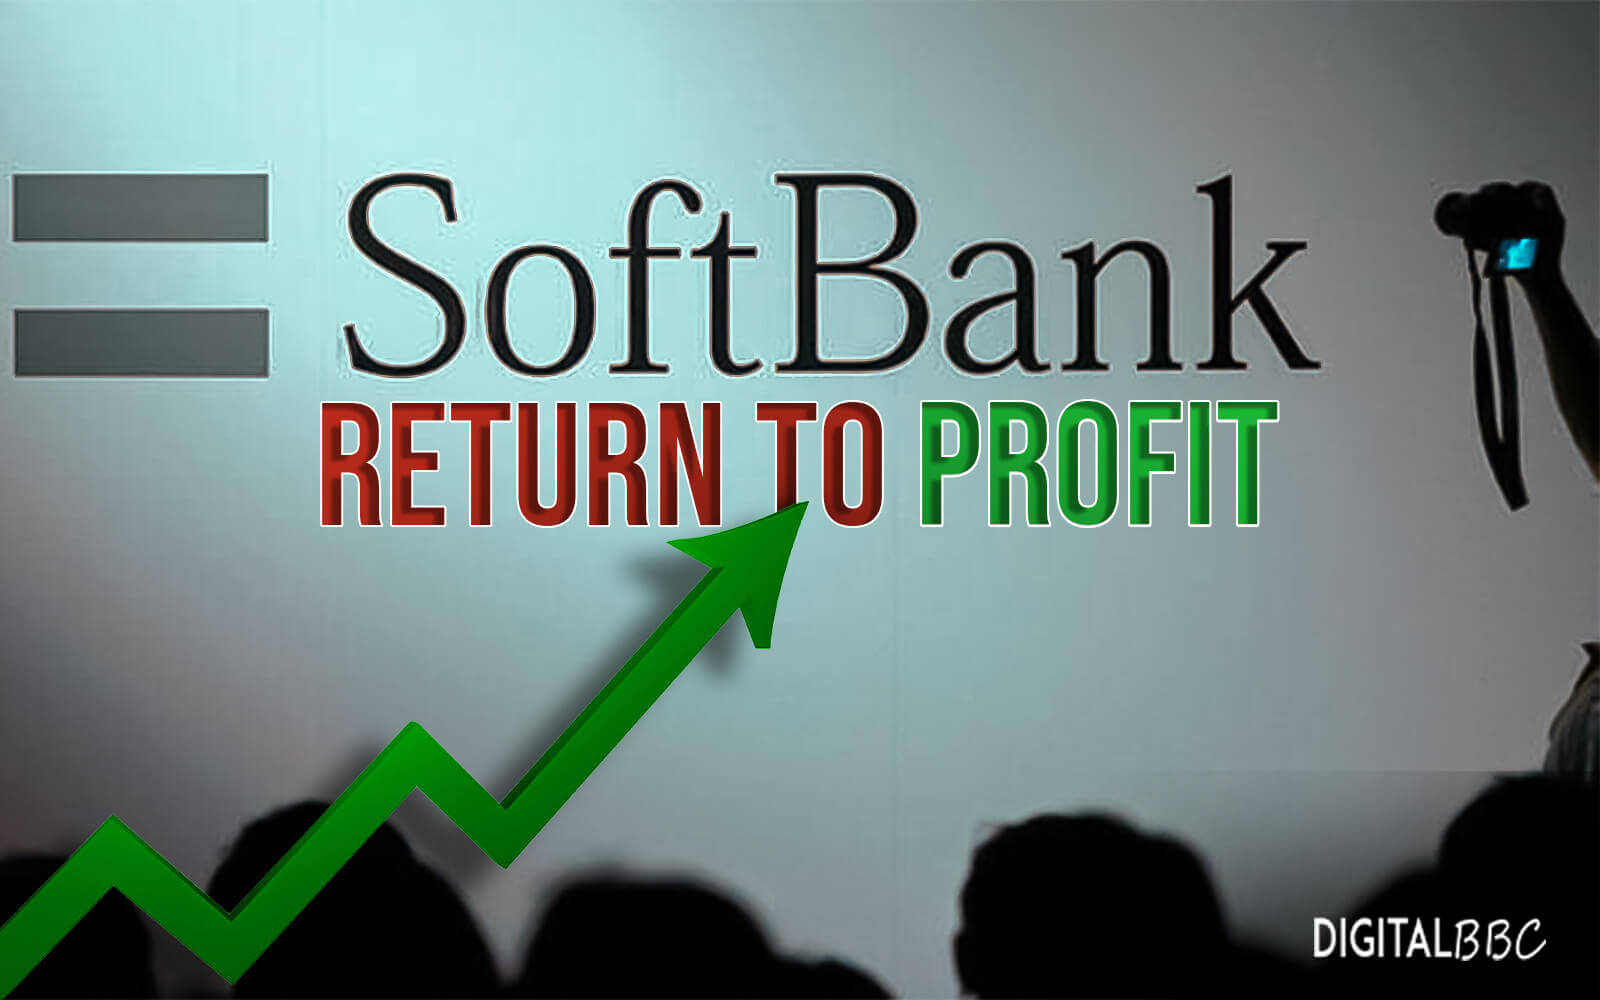 The Tech Stocks gain brings hope for Softback's return to profit